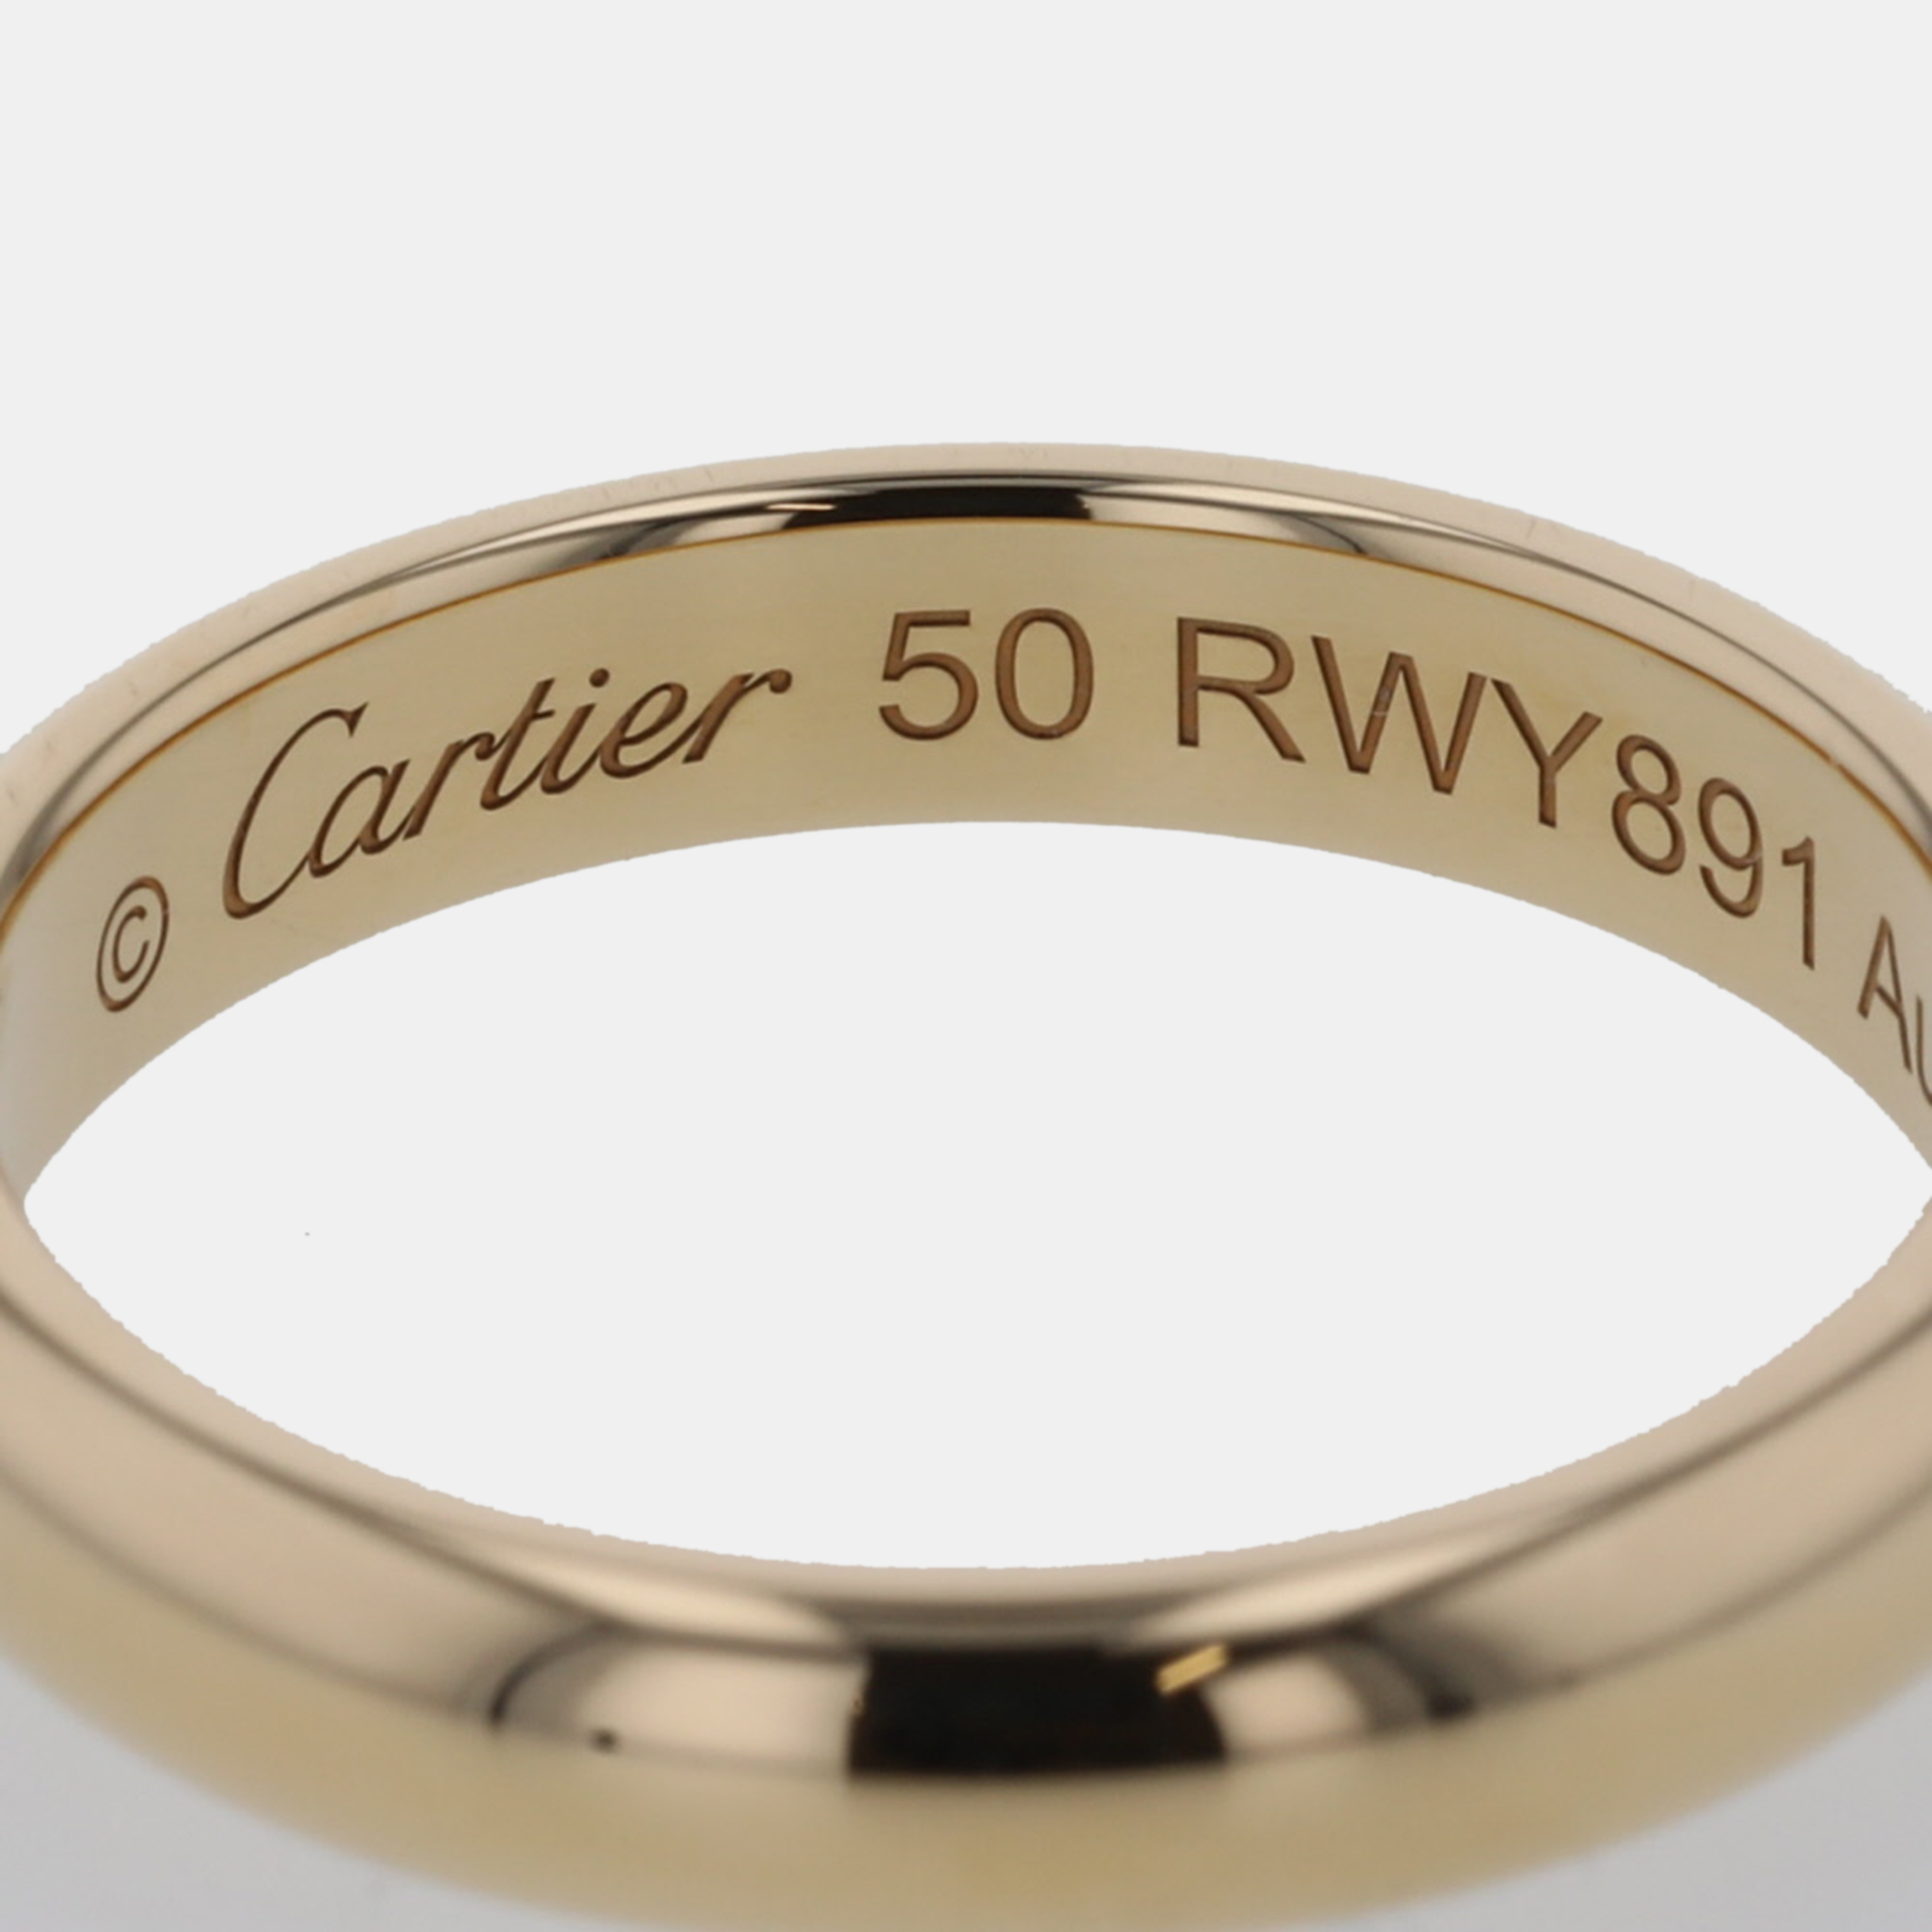 Cartier 18K Yellow Gold 1895 Wedding Band Ring EU 50